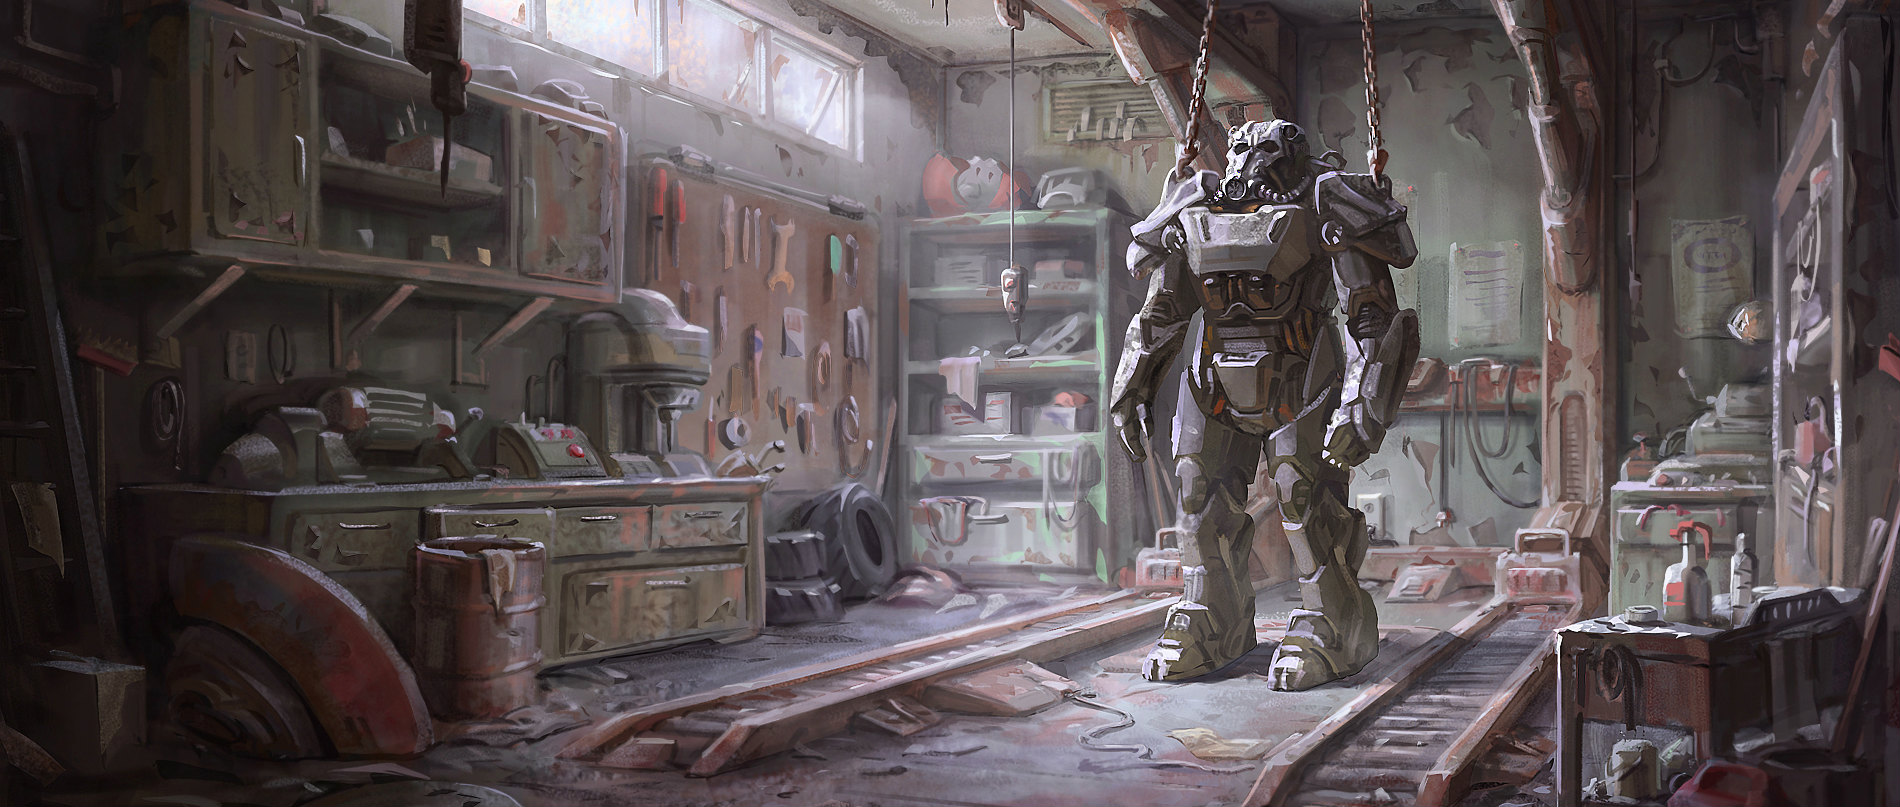 Fallout4_Concept_Garage